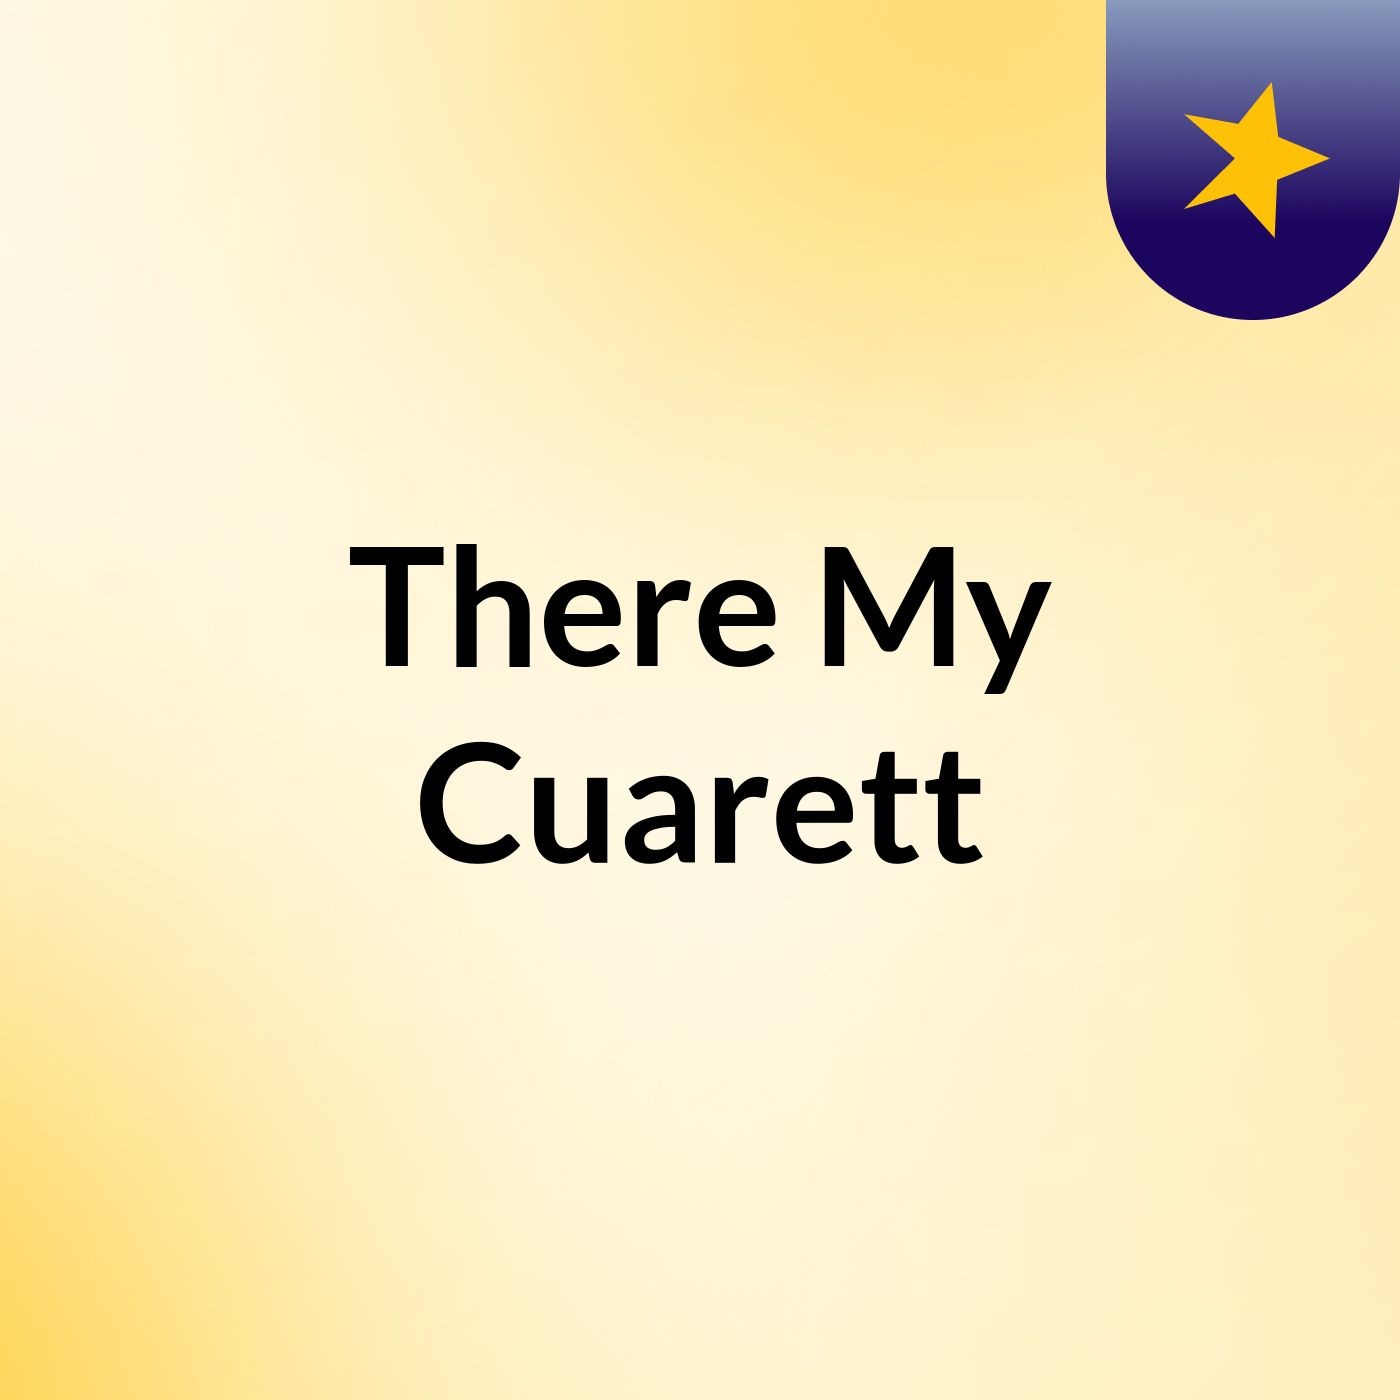 There My Cuarett